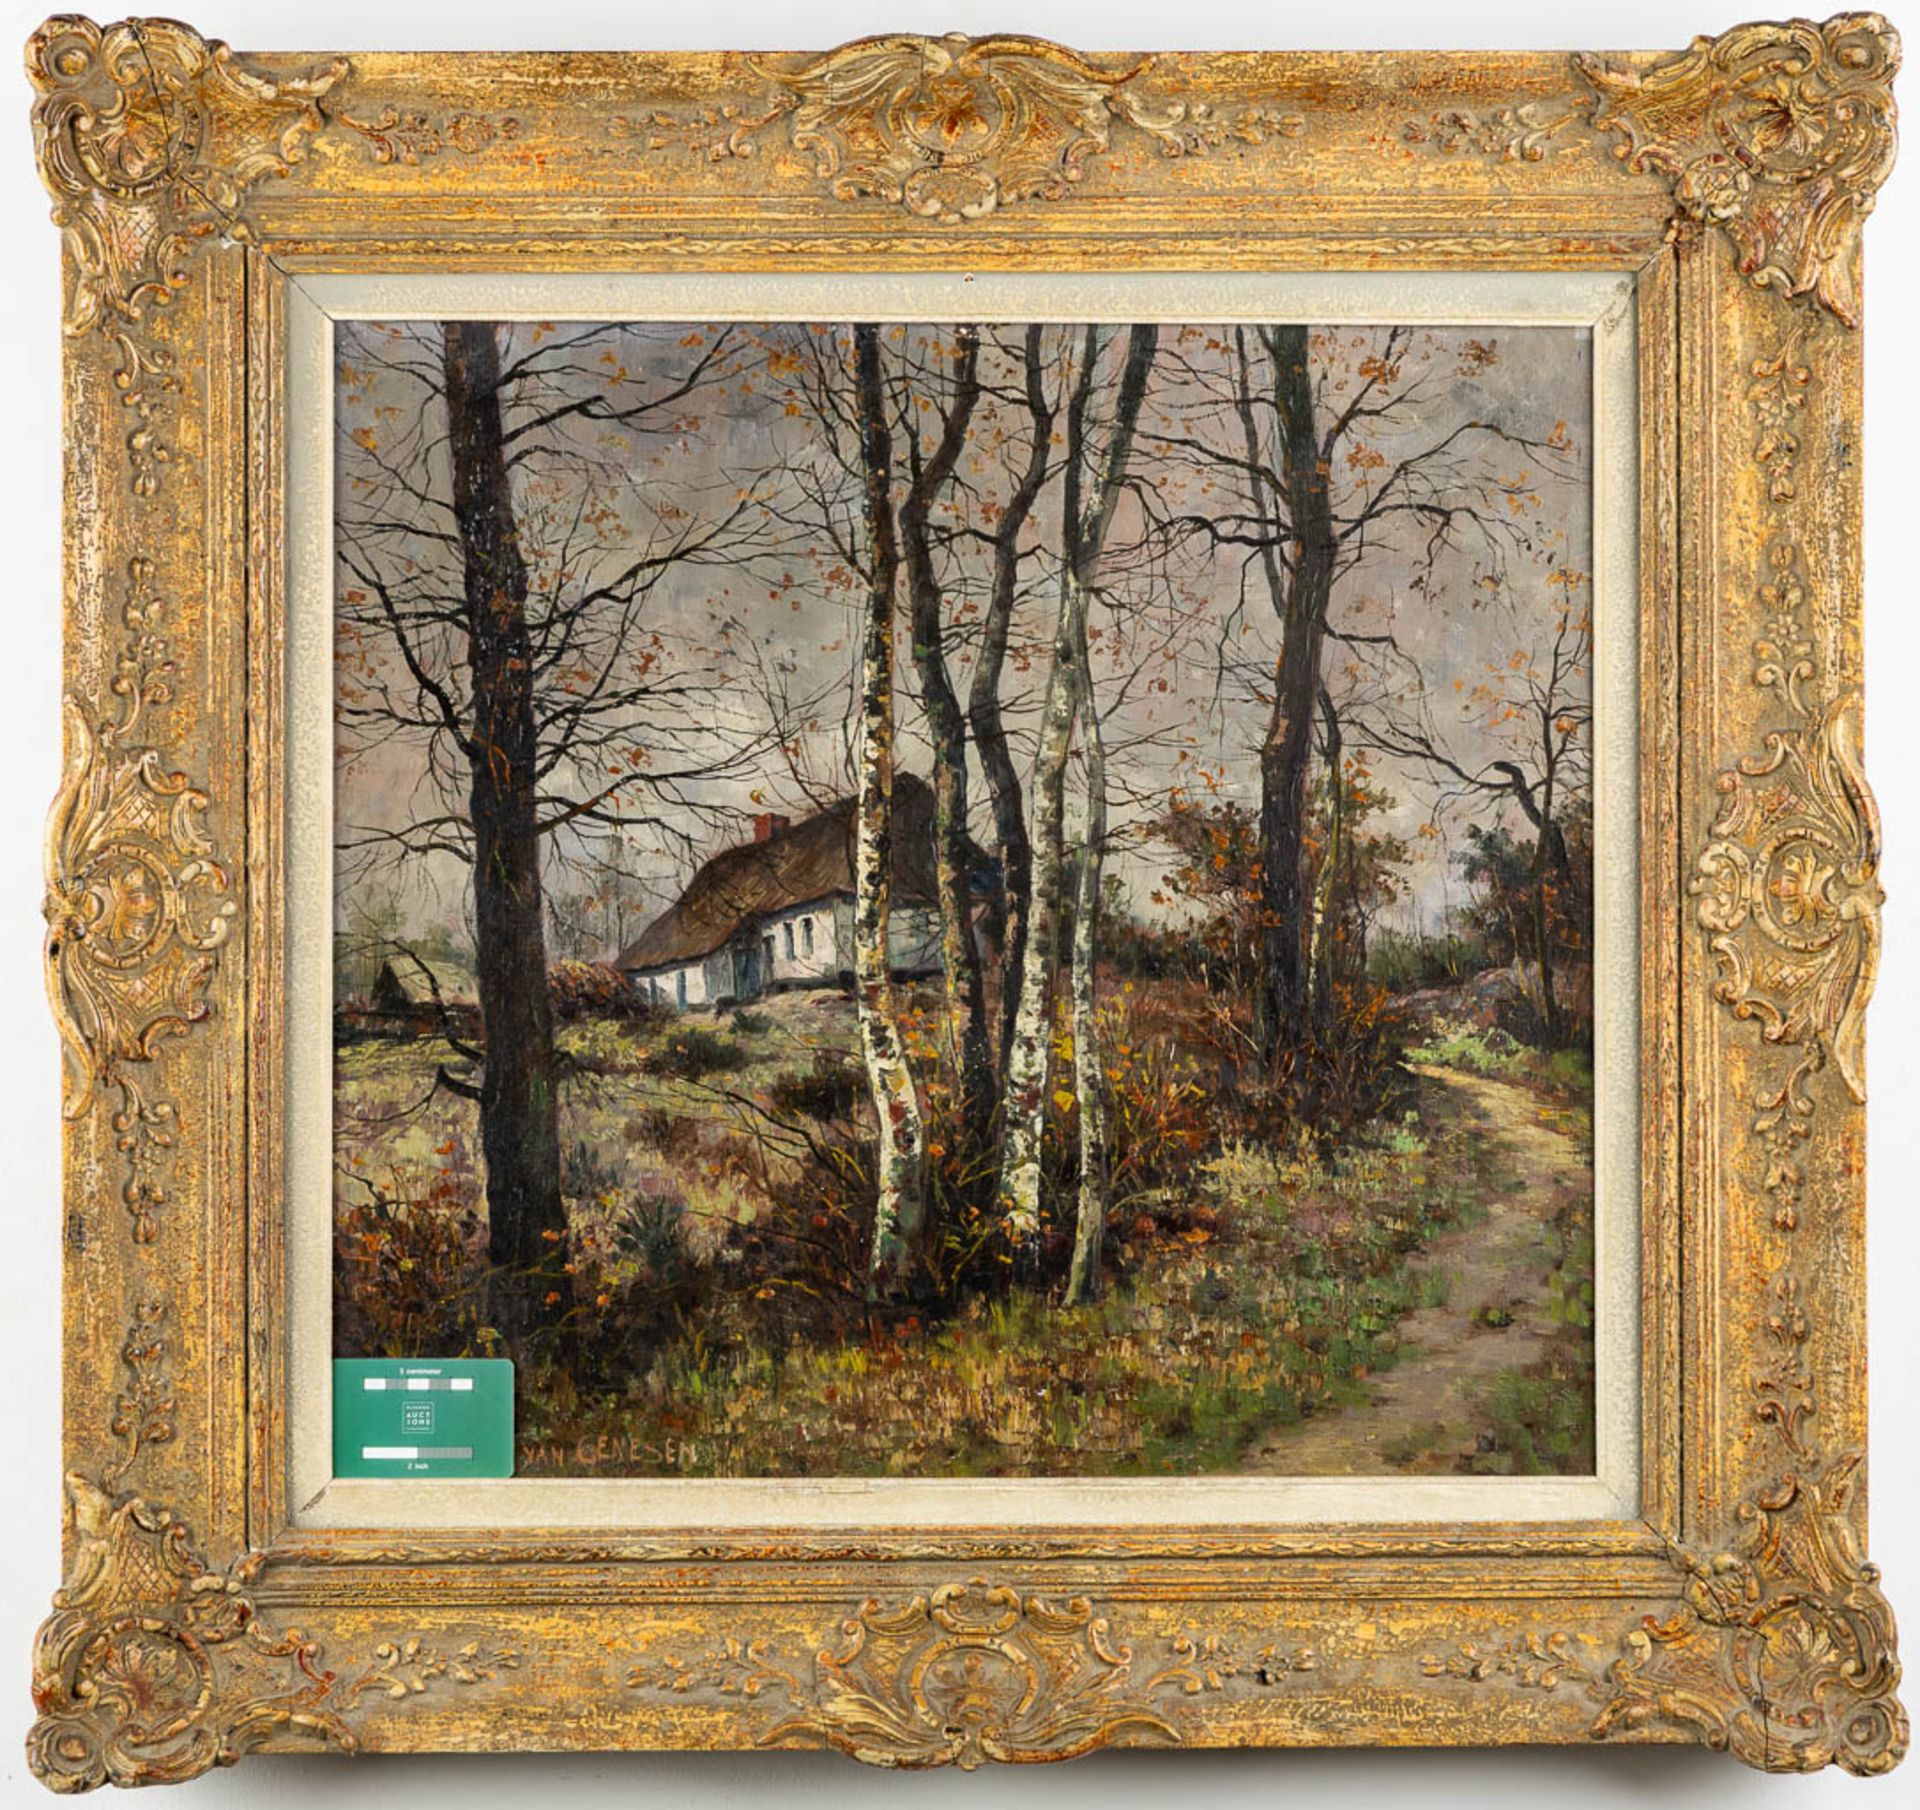 Franz VAN GENESEN (1887-1945) 'View on a farmhouse' oil on canvas. (W:60 x H:55 cm) - Image 2 of 8